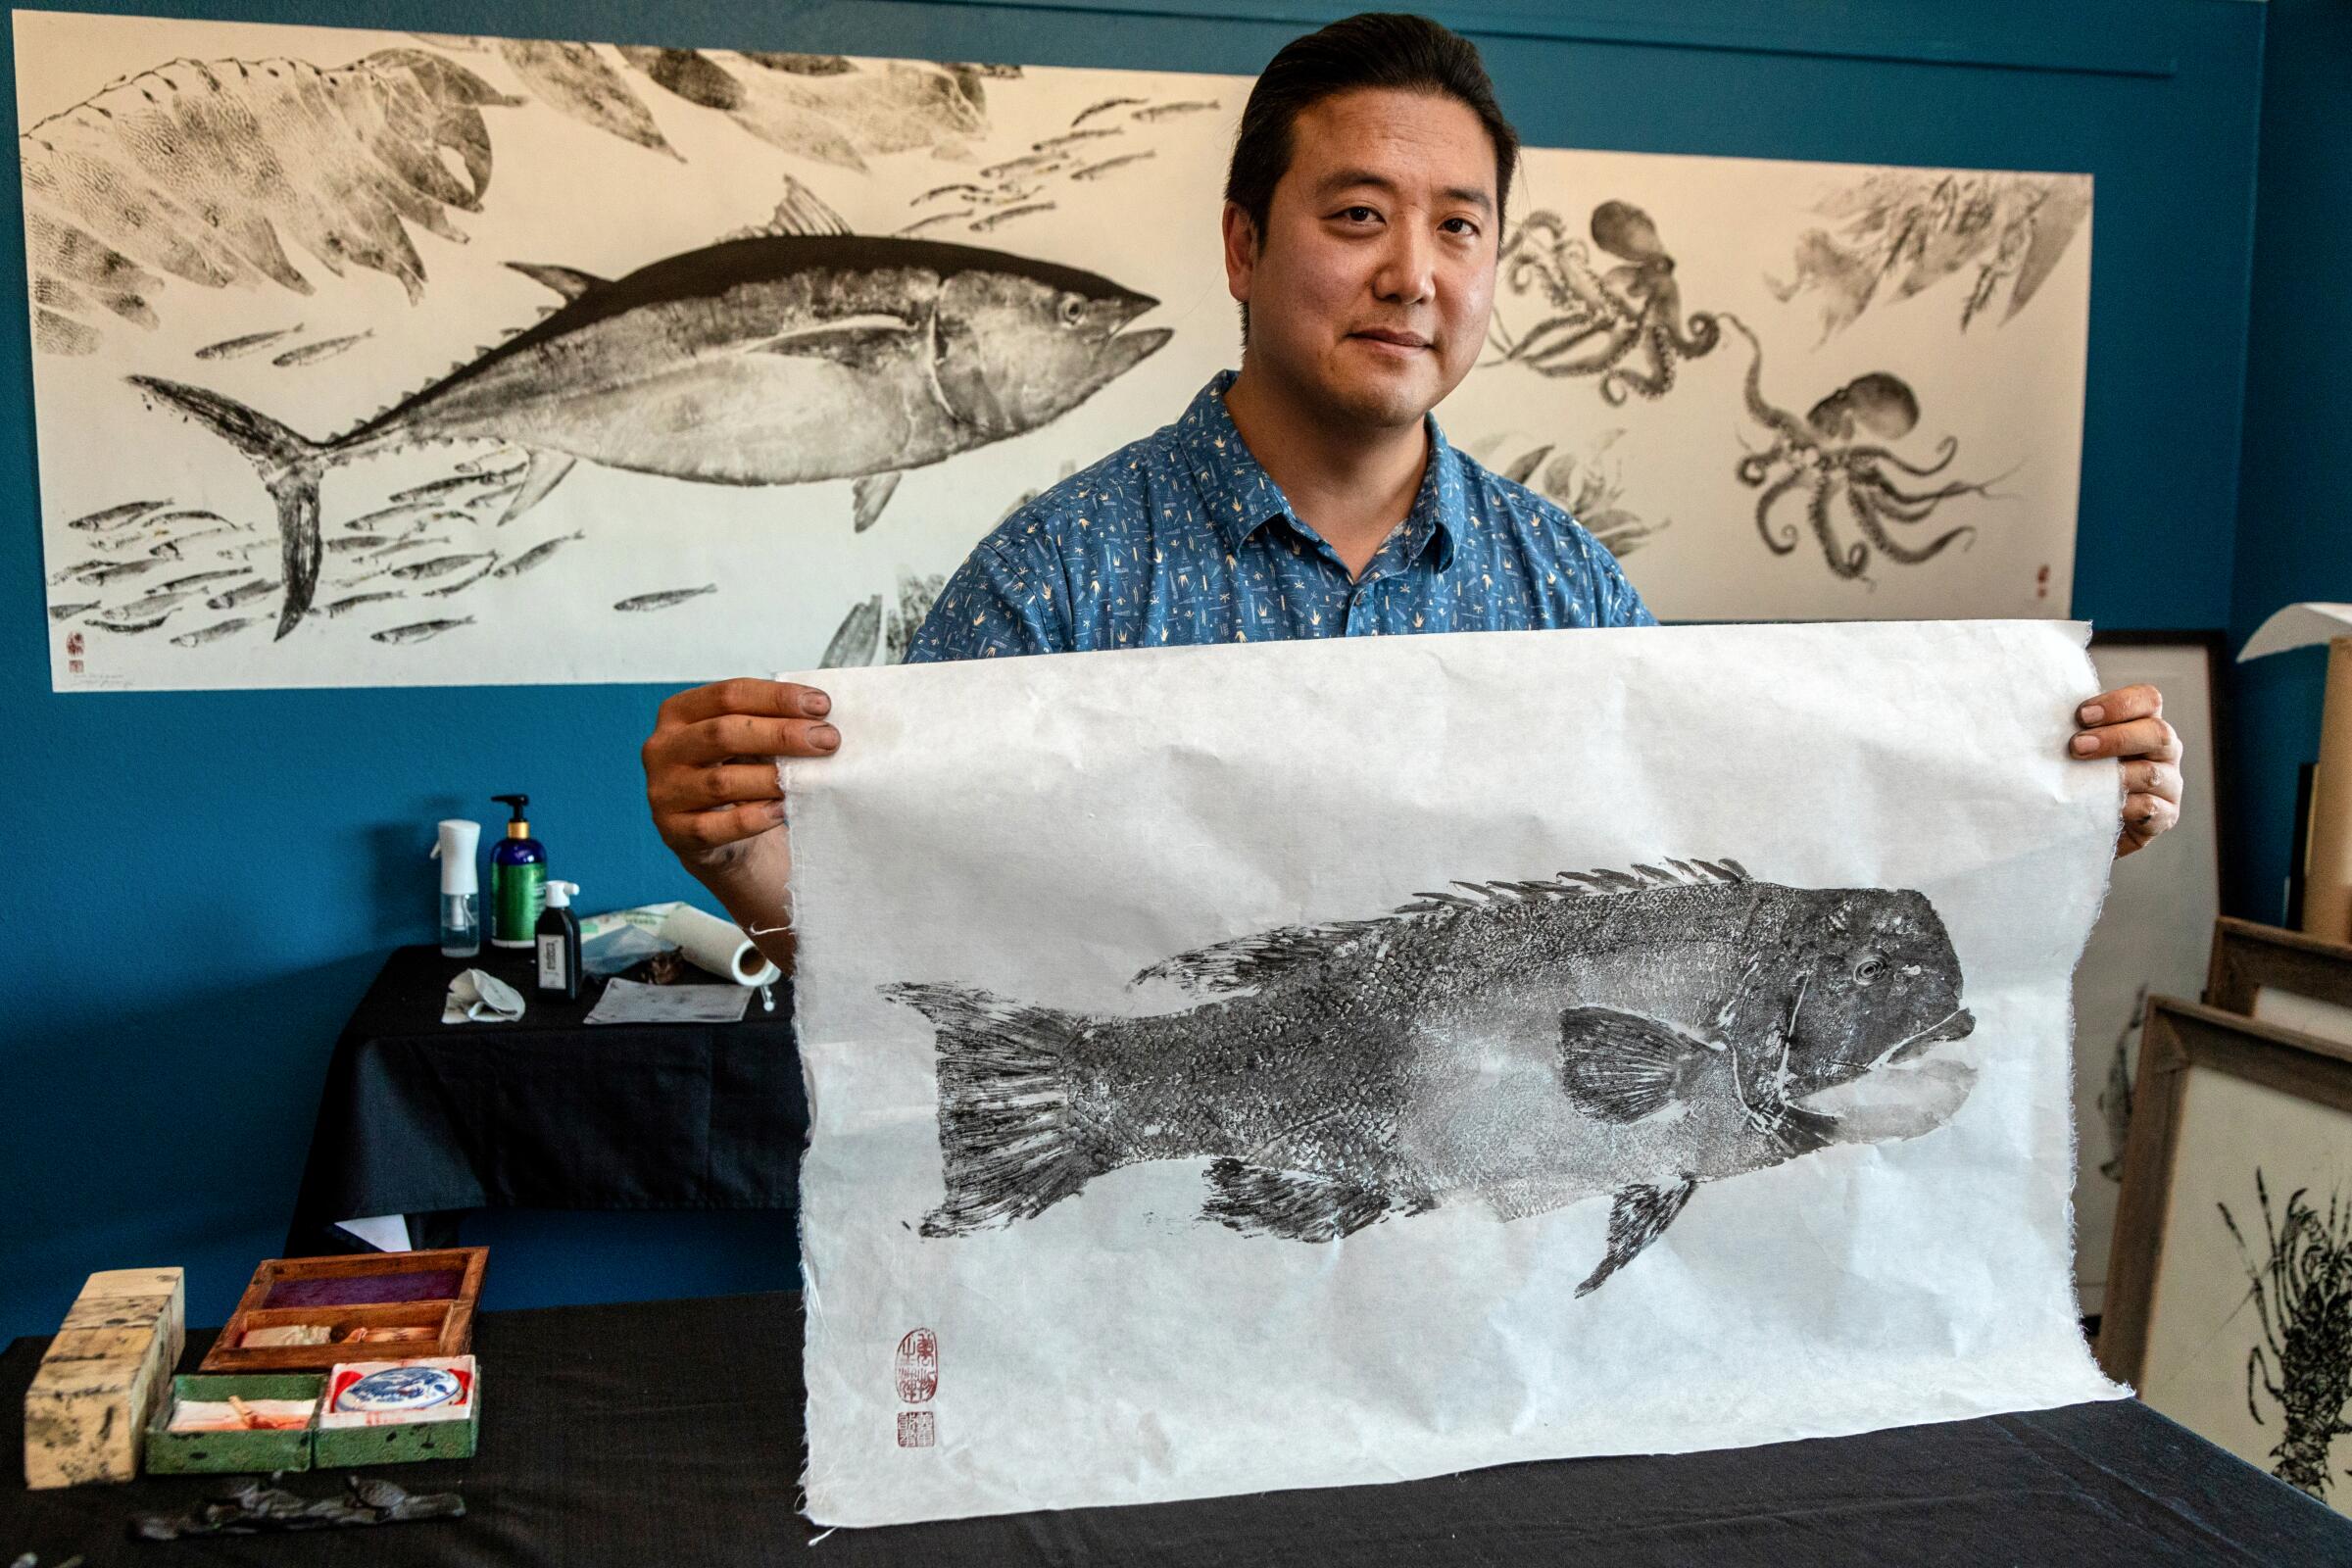 Dwight Hwang holds up a freshly made gyotaku print of a sheephead fish.